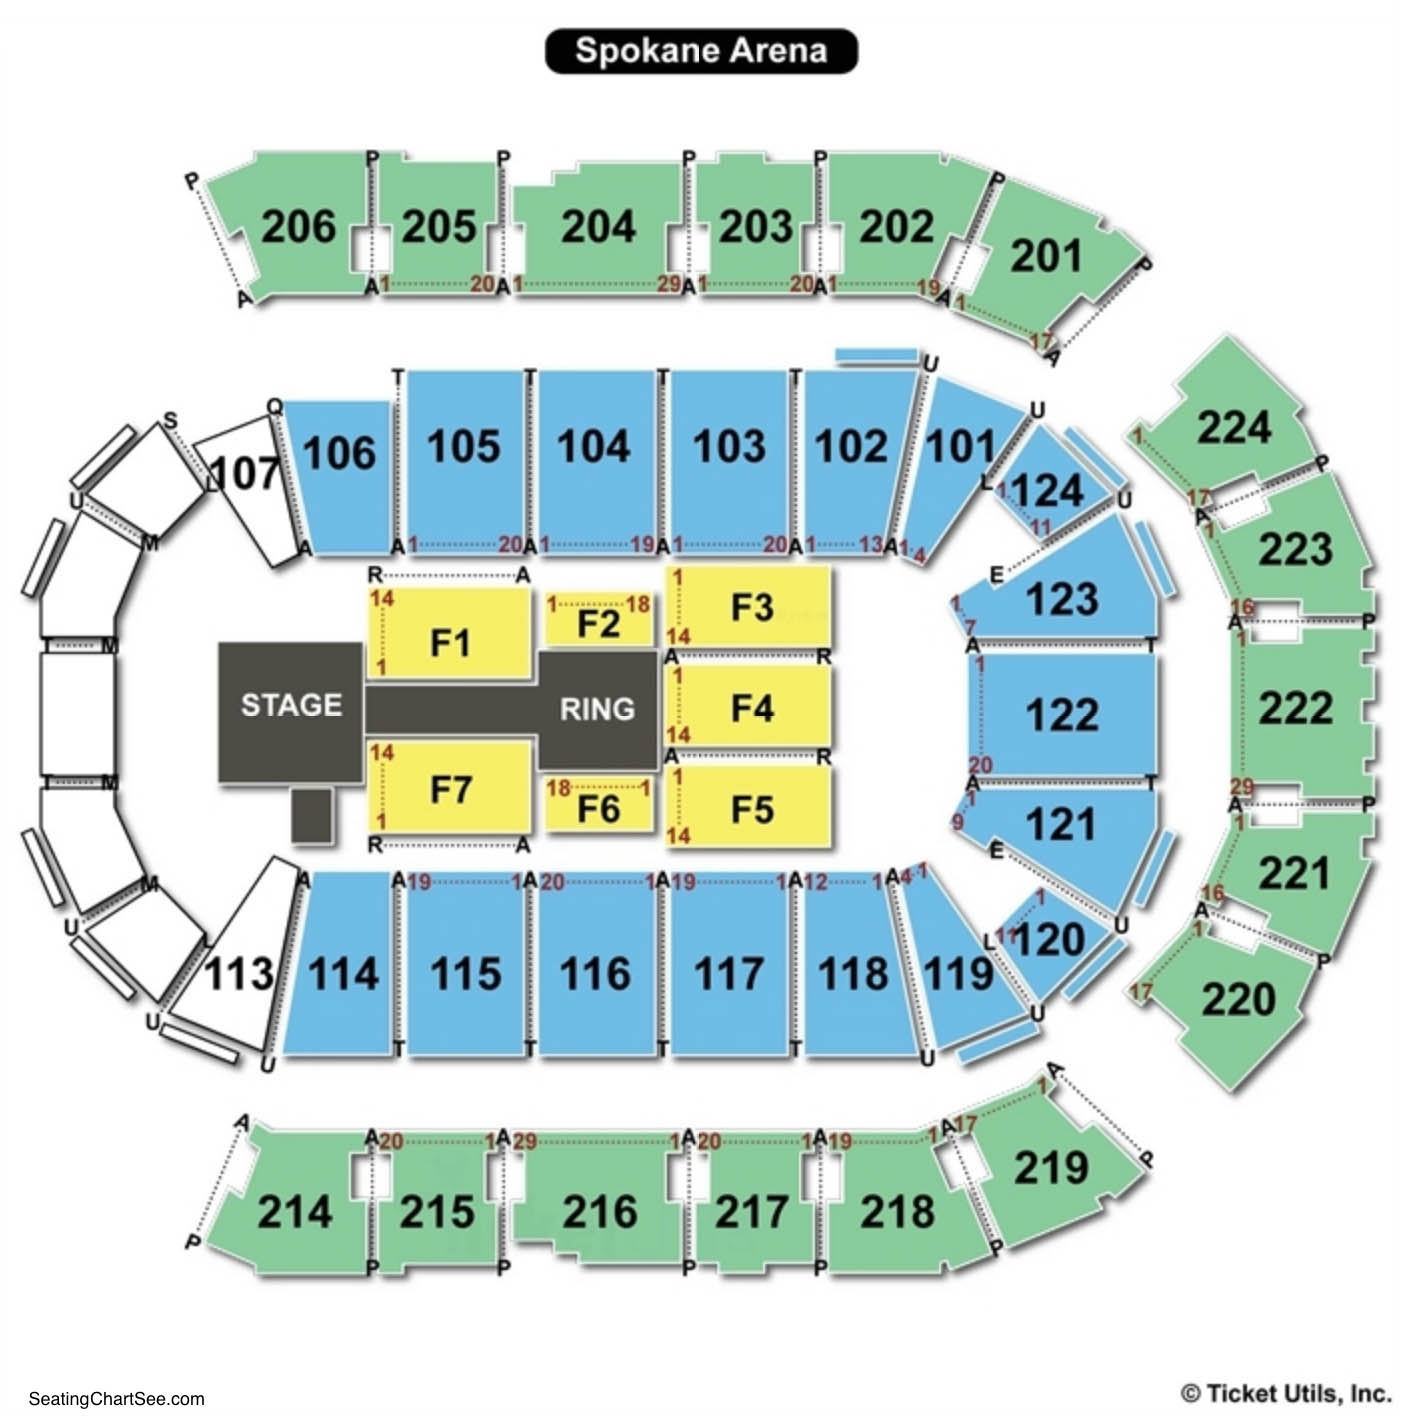 Spokane Arena Seating Charts Views